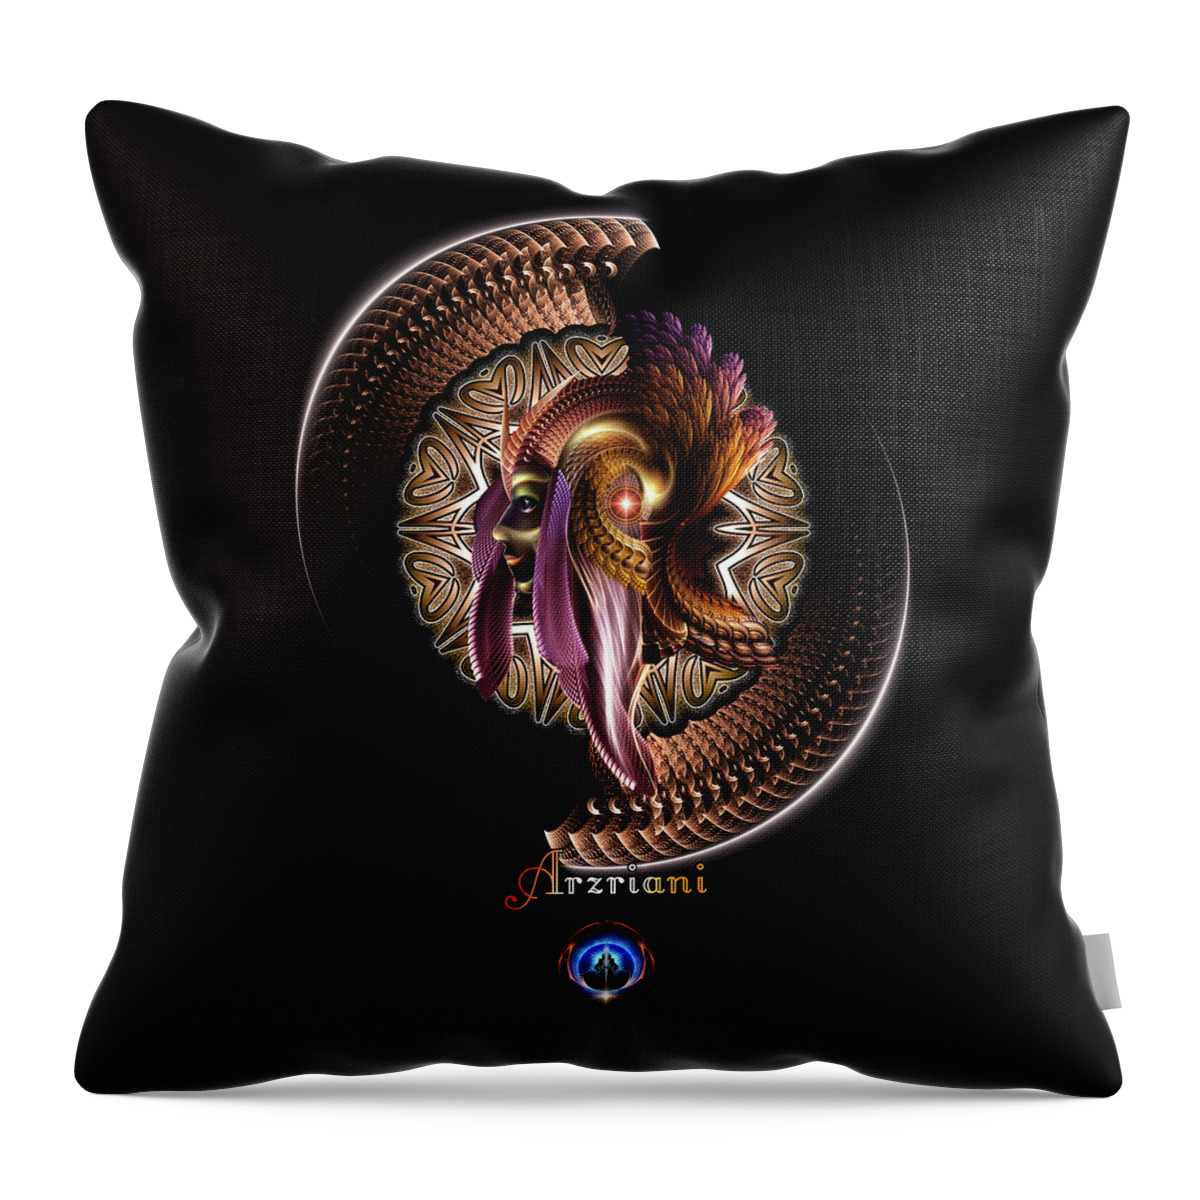 Asteroidday Throw Pillow featuring the digital art Arzriani The Golden Empress Fractal Portrait by Rolando Burbon